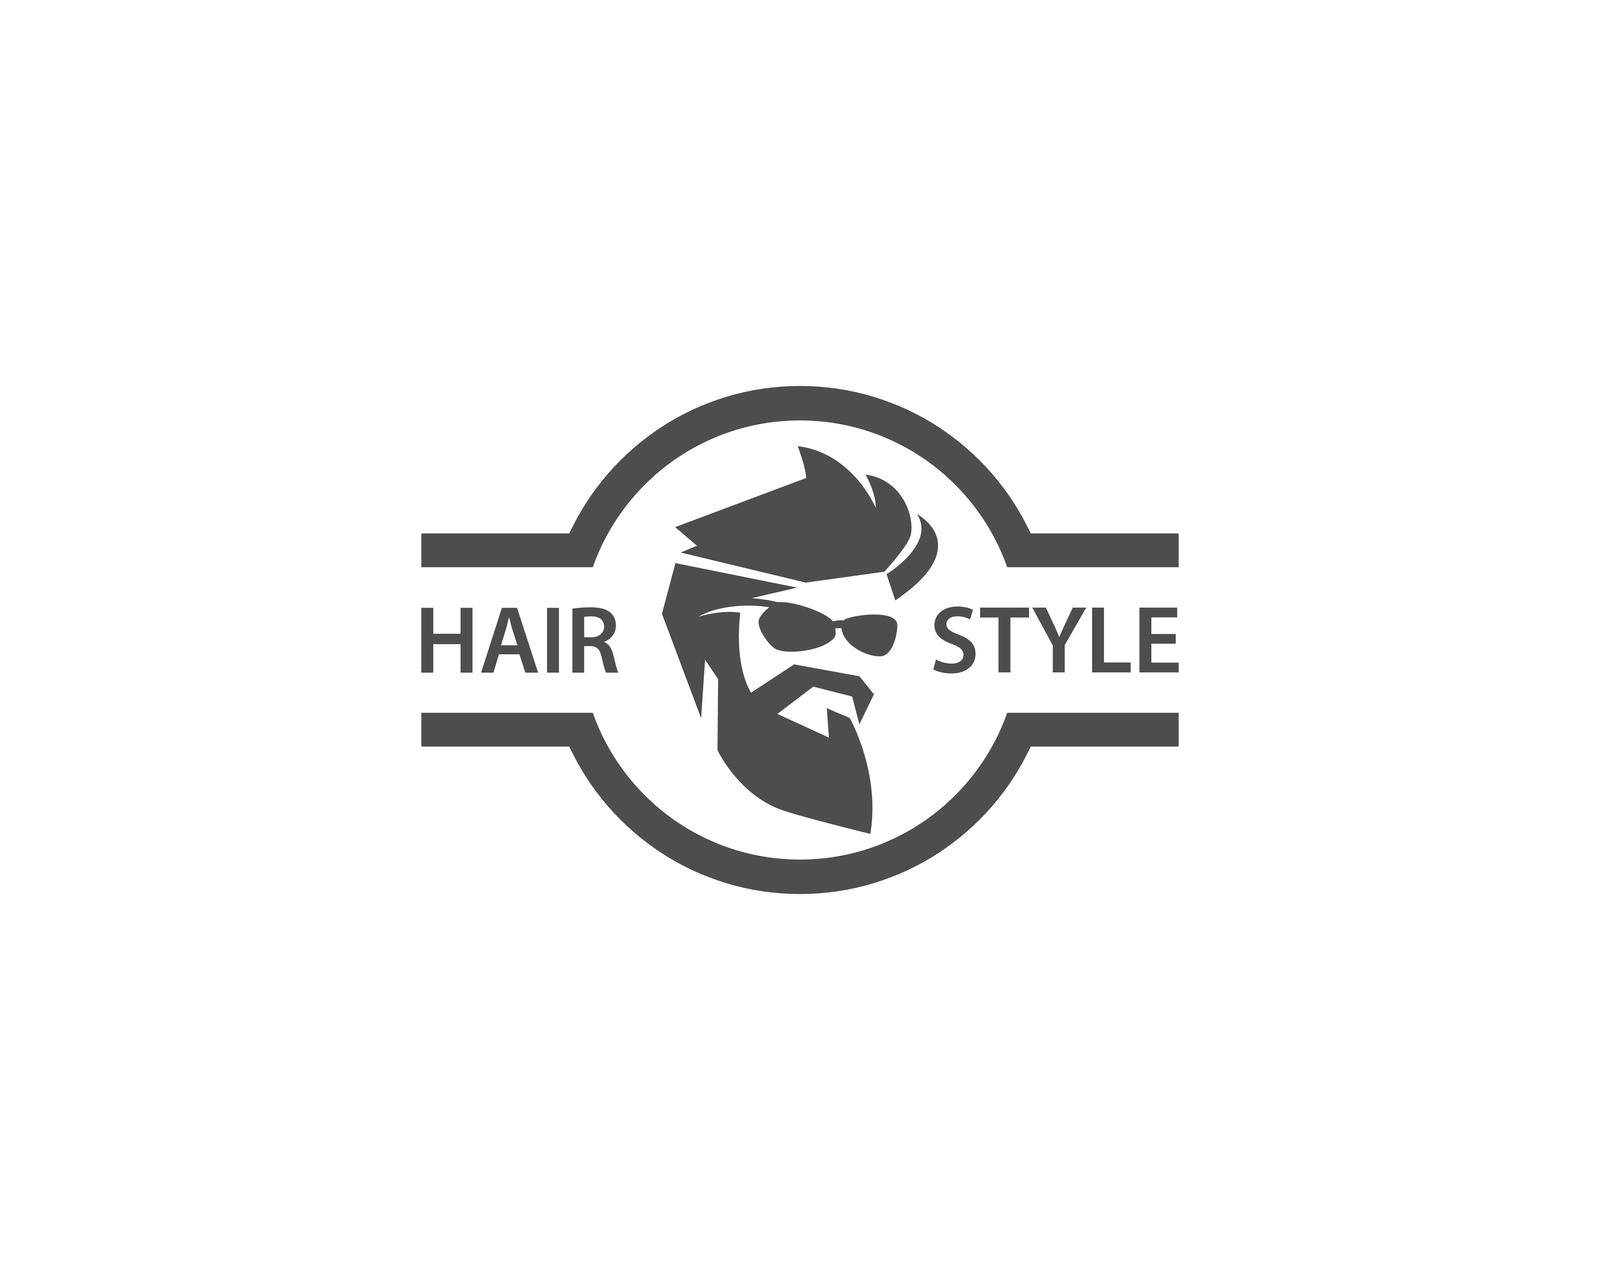 Barber shop logo vector by awk